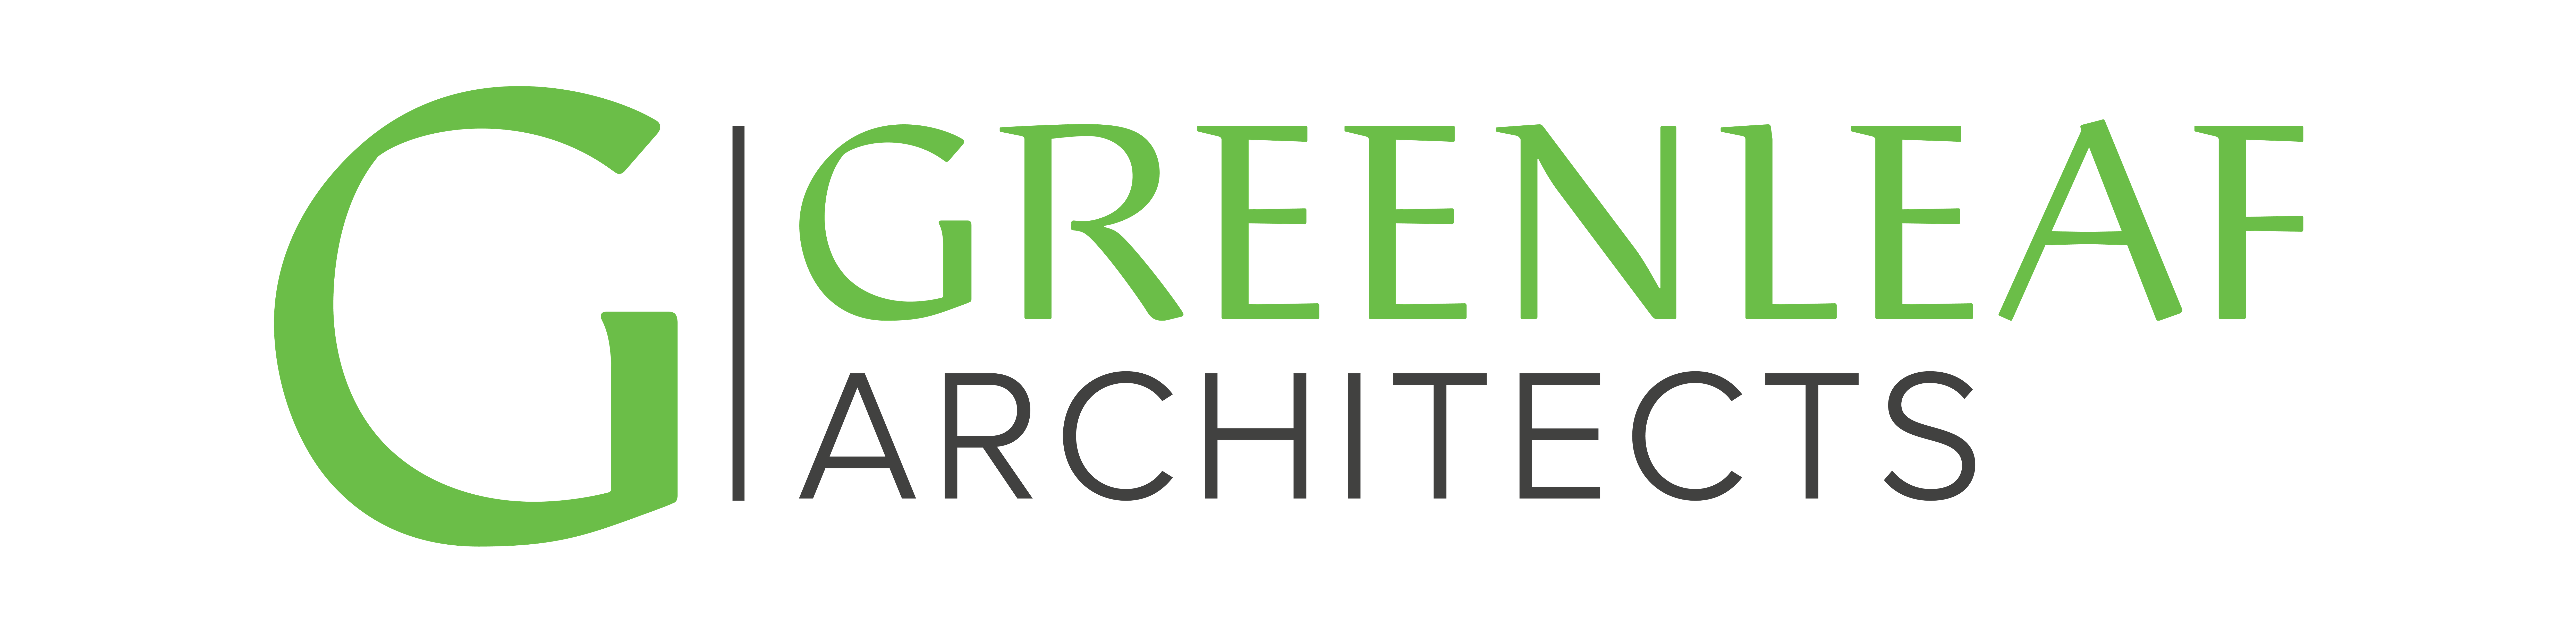 Greenleaf GA-Main Logo-Colored on White.png